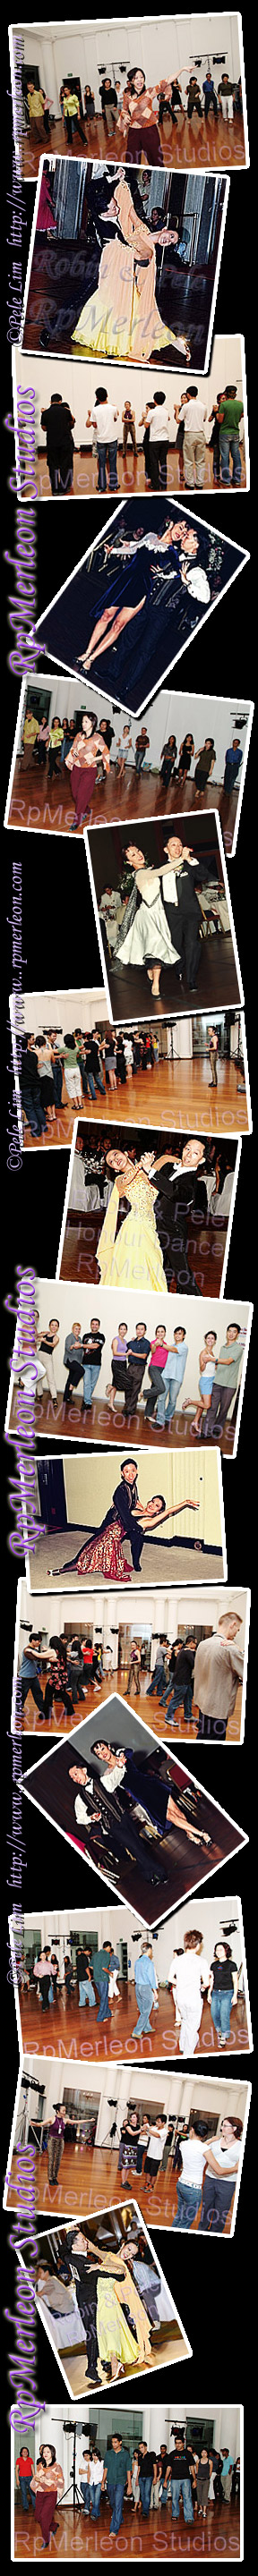 RpMerleon Studios Dance Types Singapore Salsa Latin Ballroom Dancing Courses Class Lessons Hip Hop Street Jazz Richard Gere Jennifer Lopez